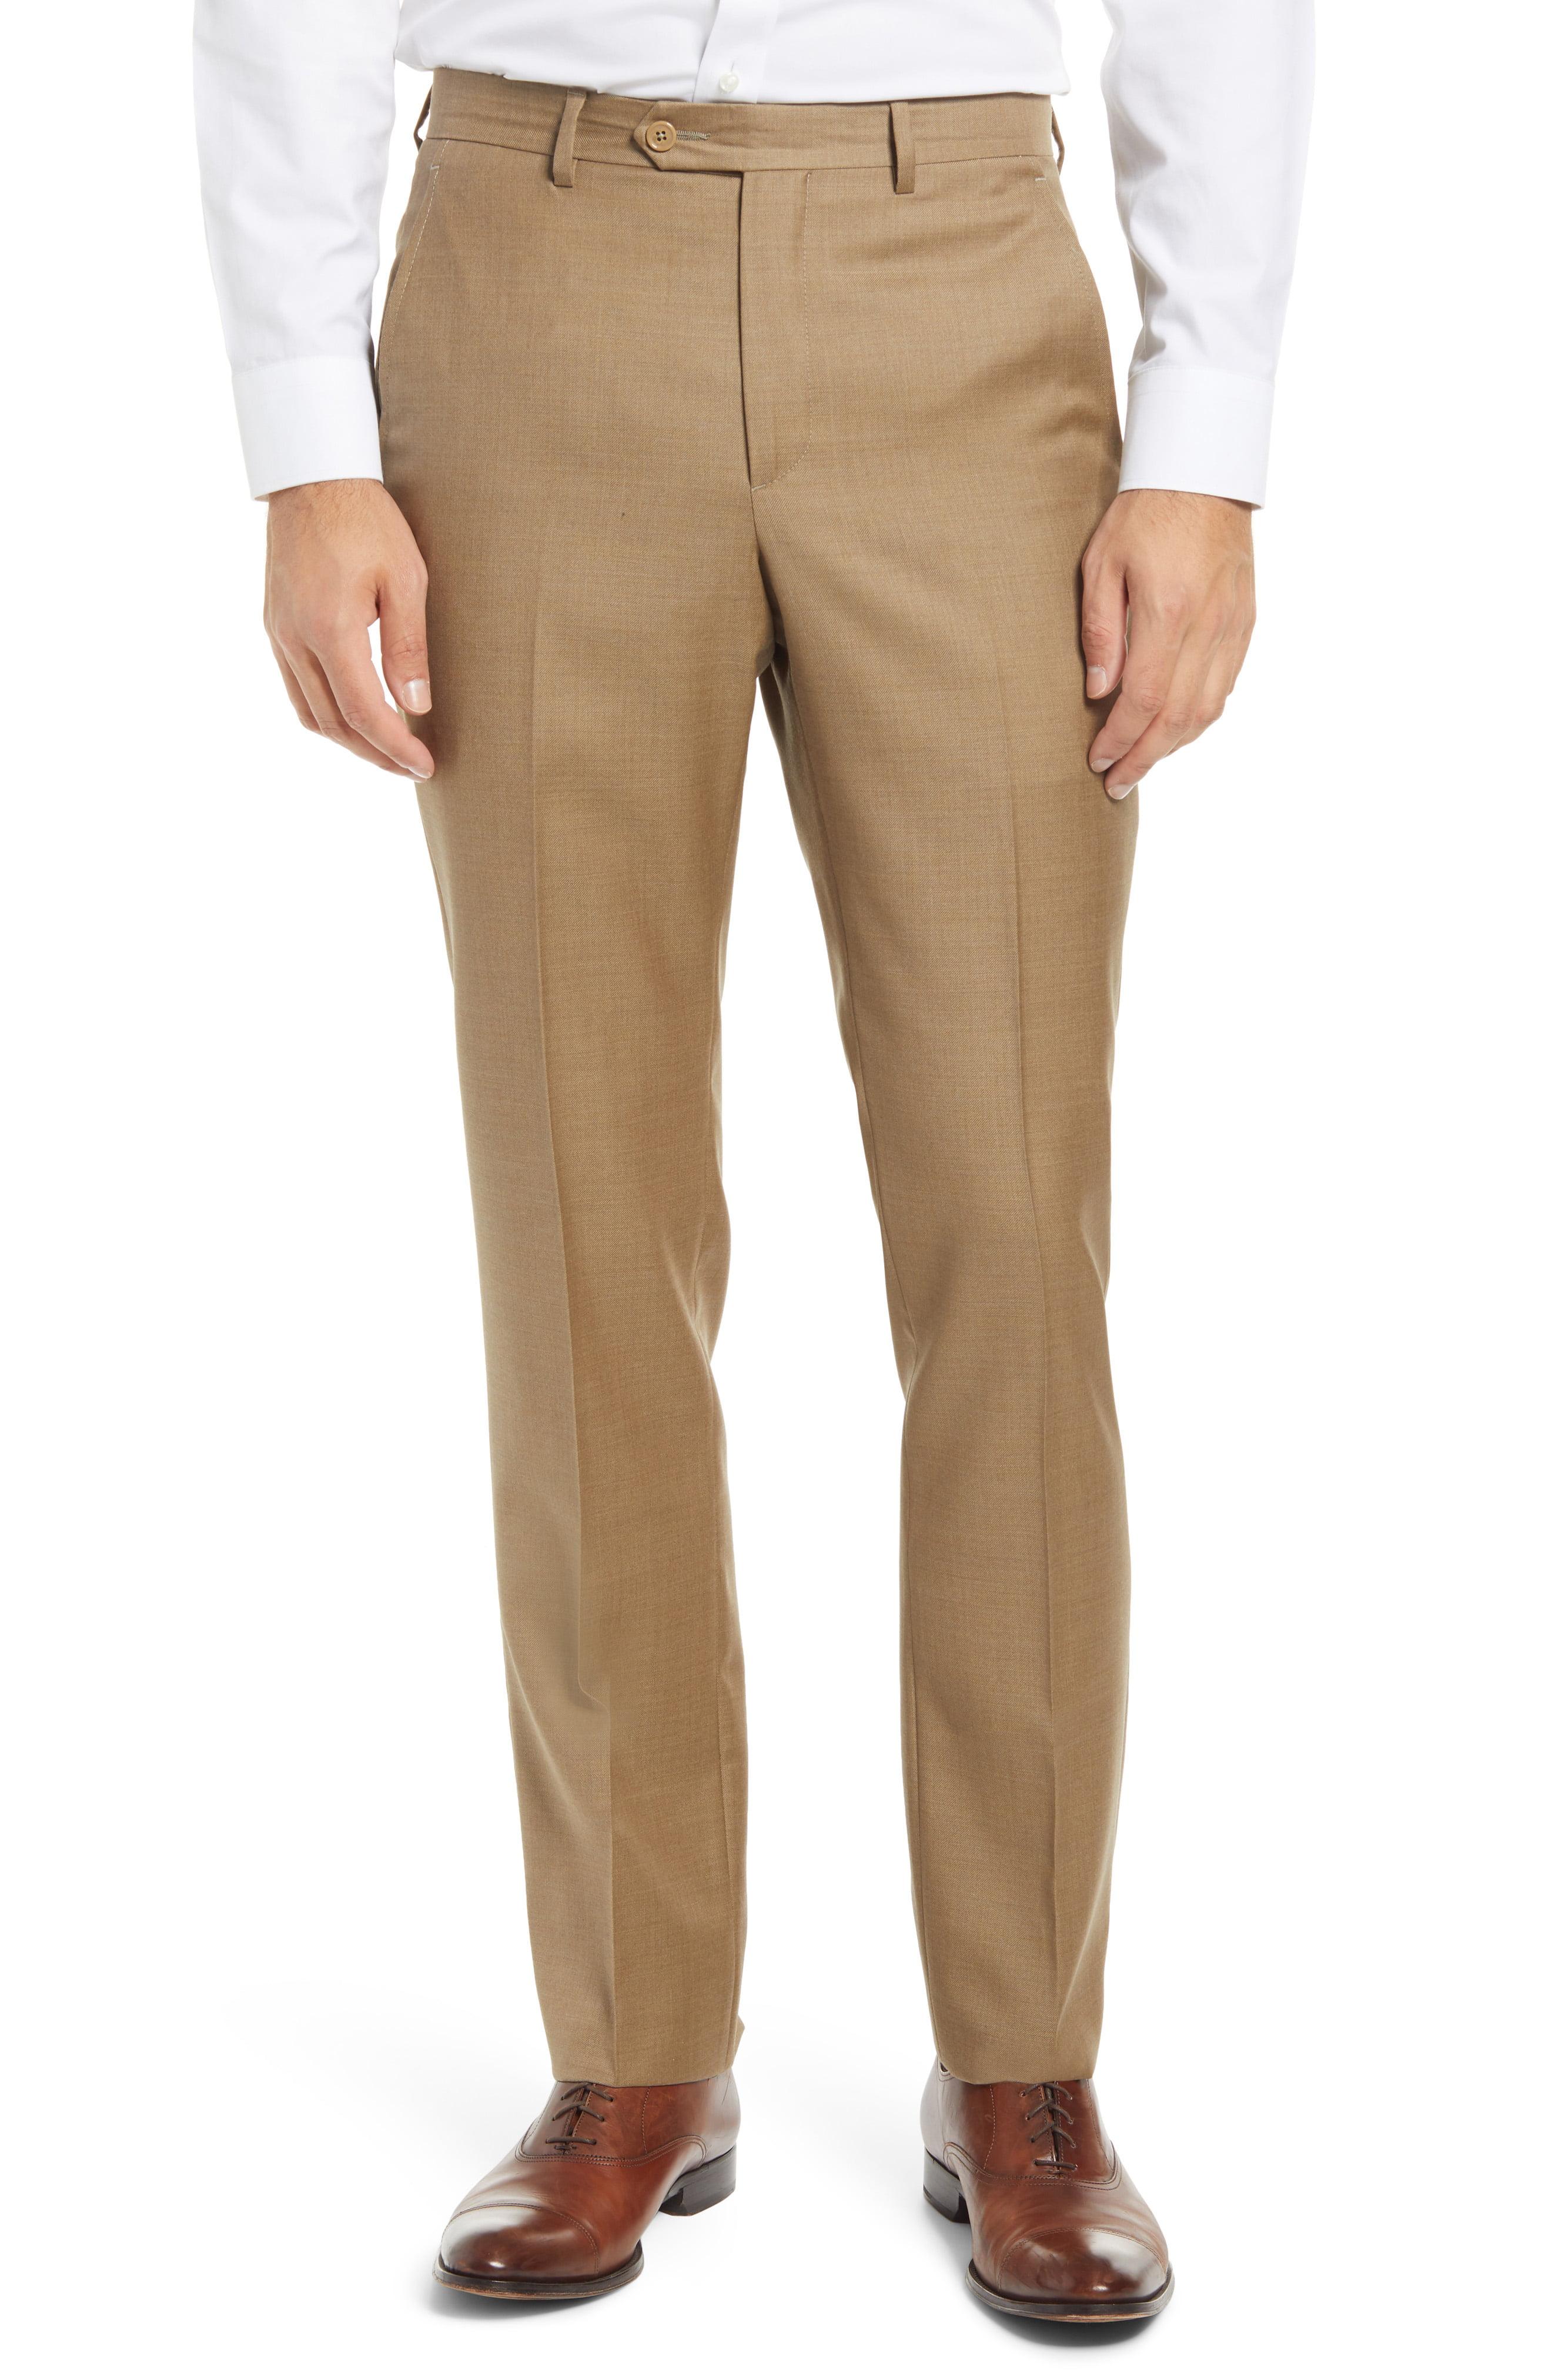 Santorelli Roma Flat Front Wool Dress Pants in Tan (Brown) for Men - Lyst